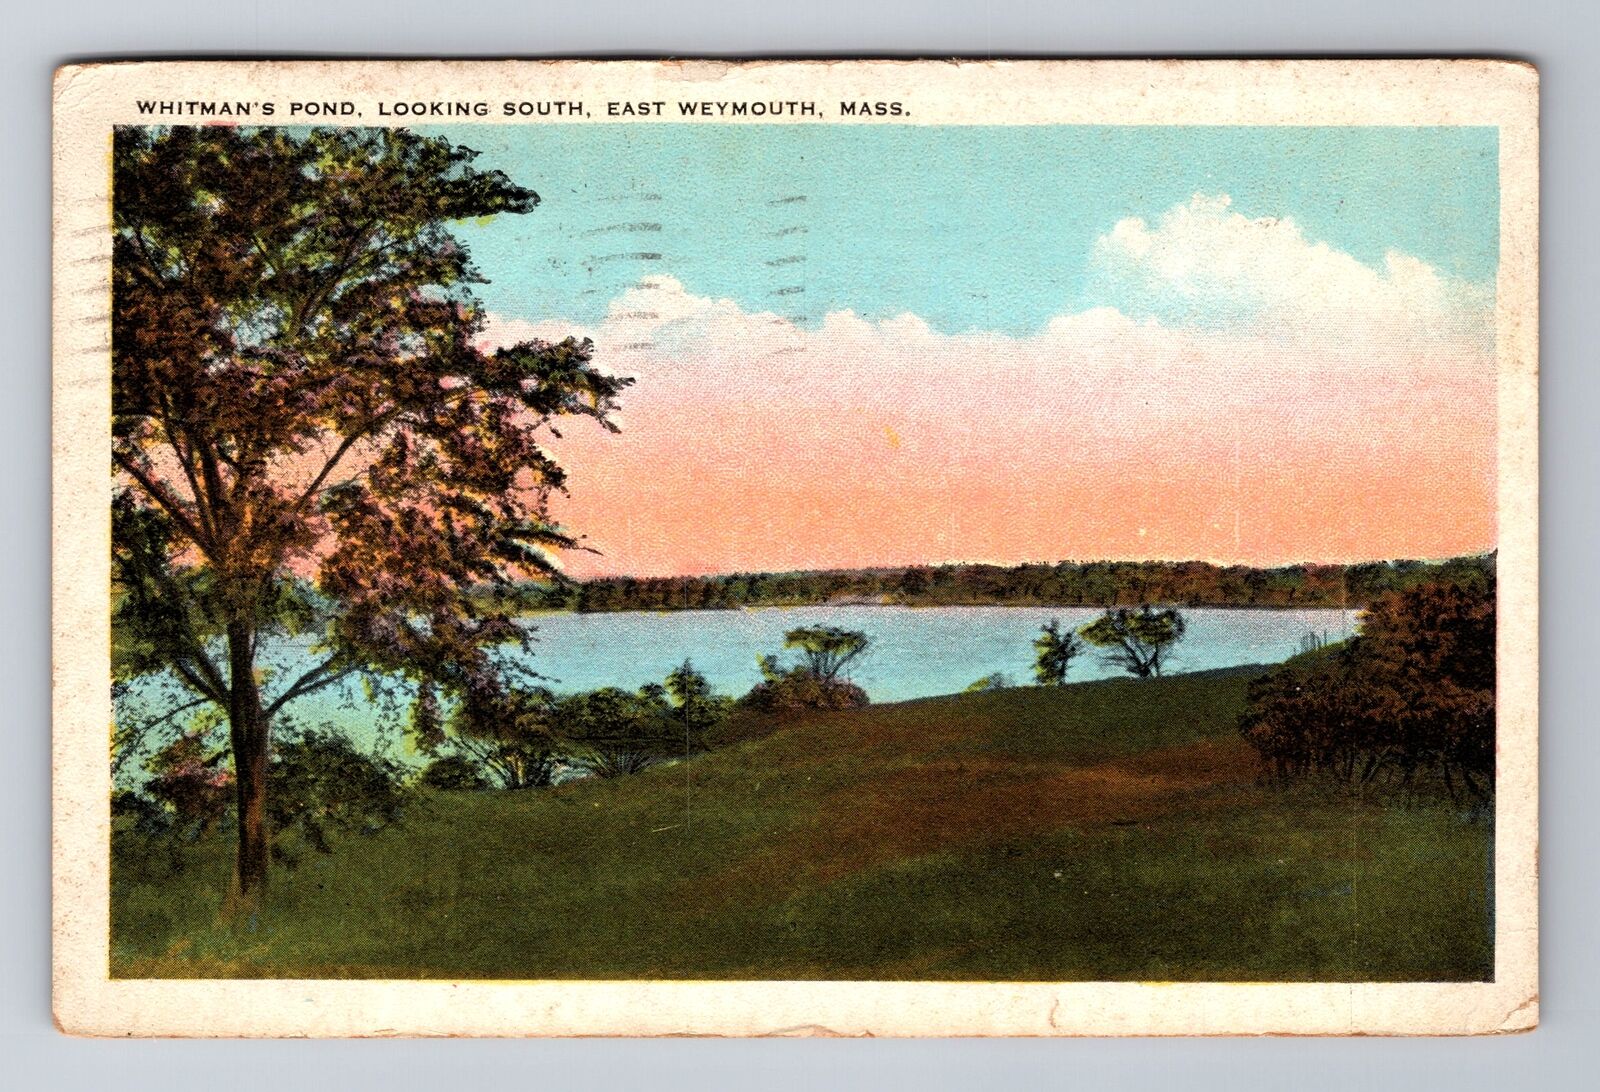 East Weymouth MA-Massachusetts, Whitman's Pond South c1931 Vintage Postcard